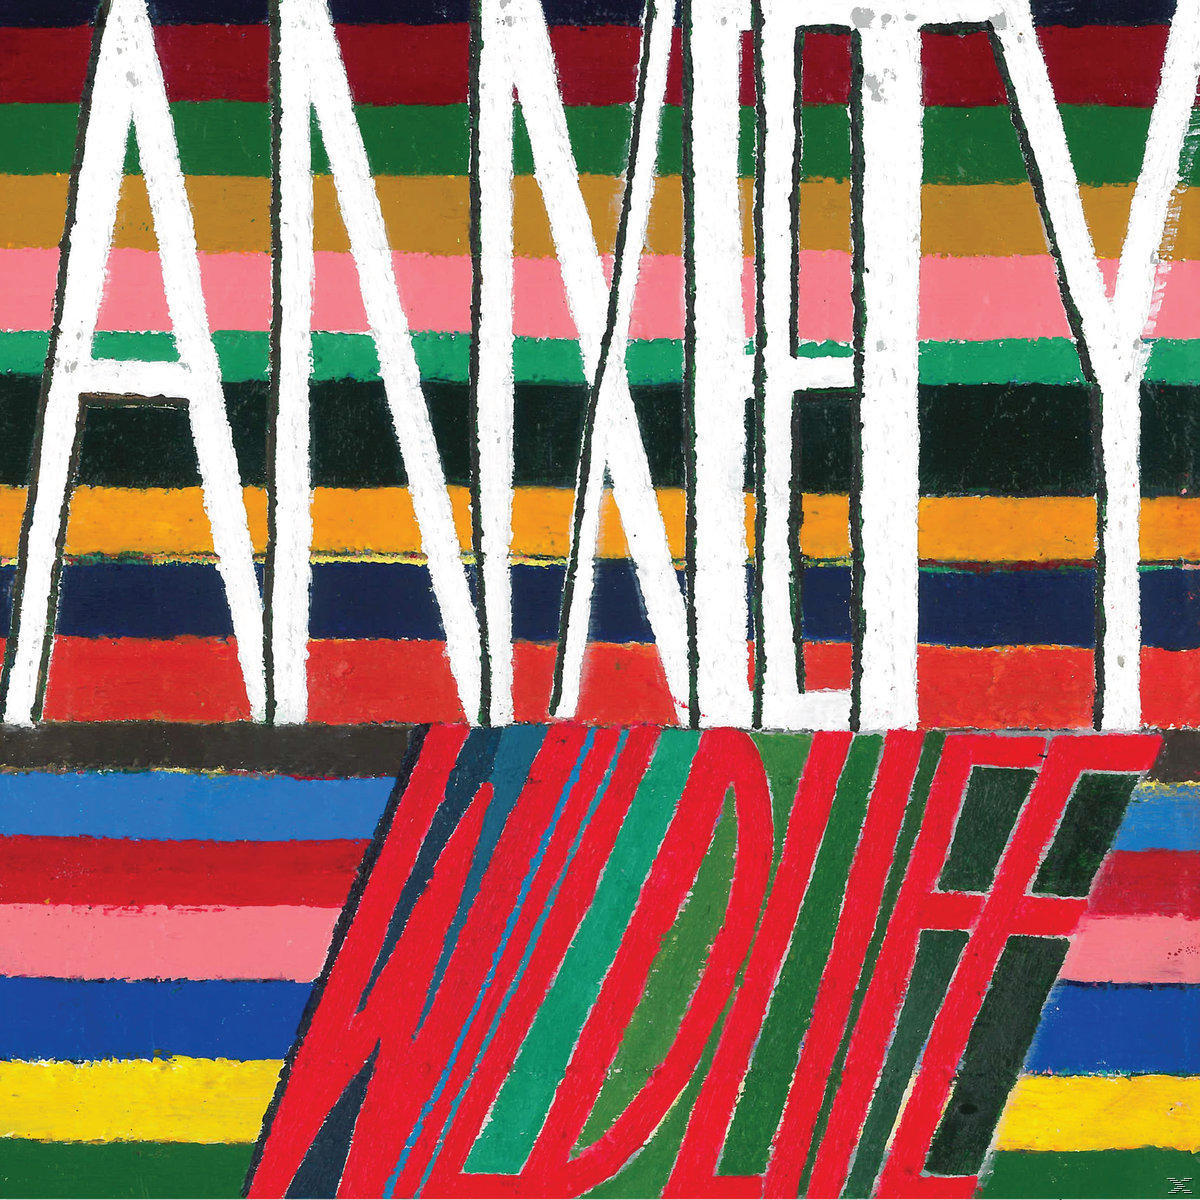 (Vinyl) LIFE - - Anxiety WILD